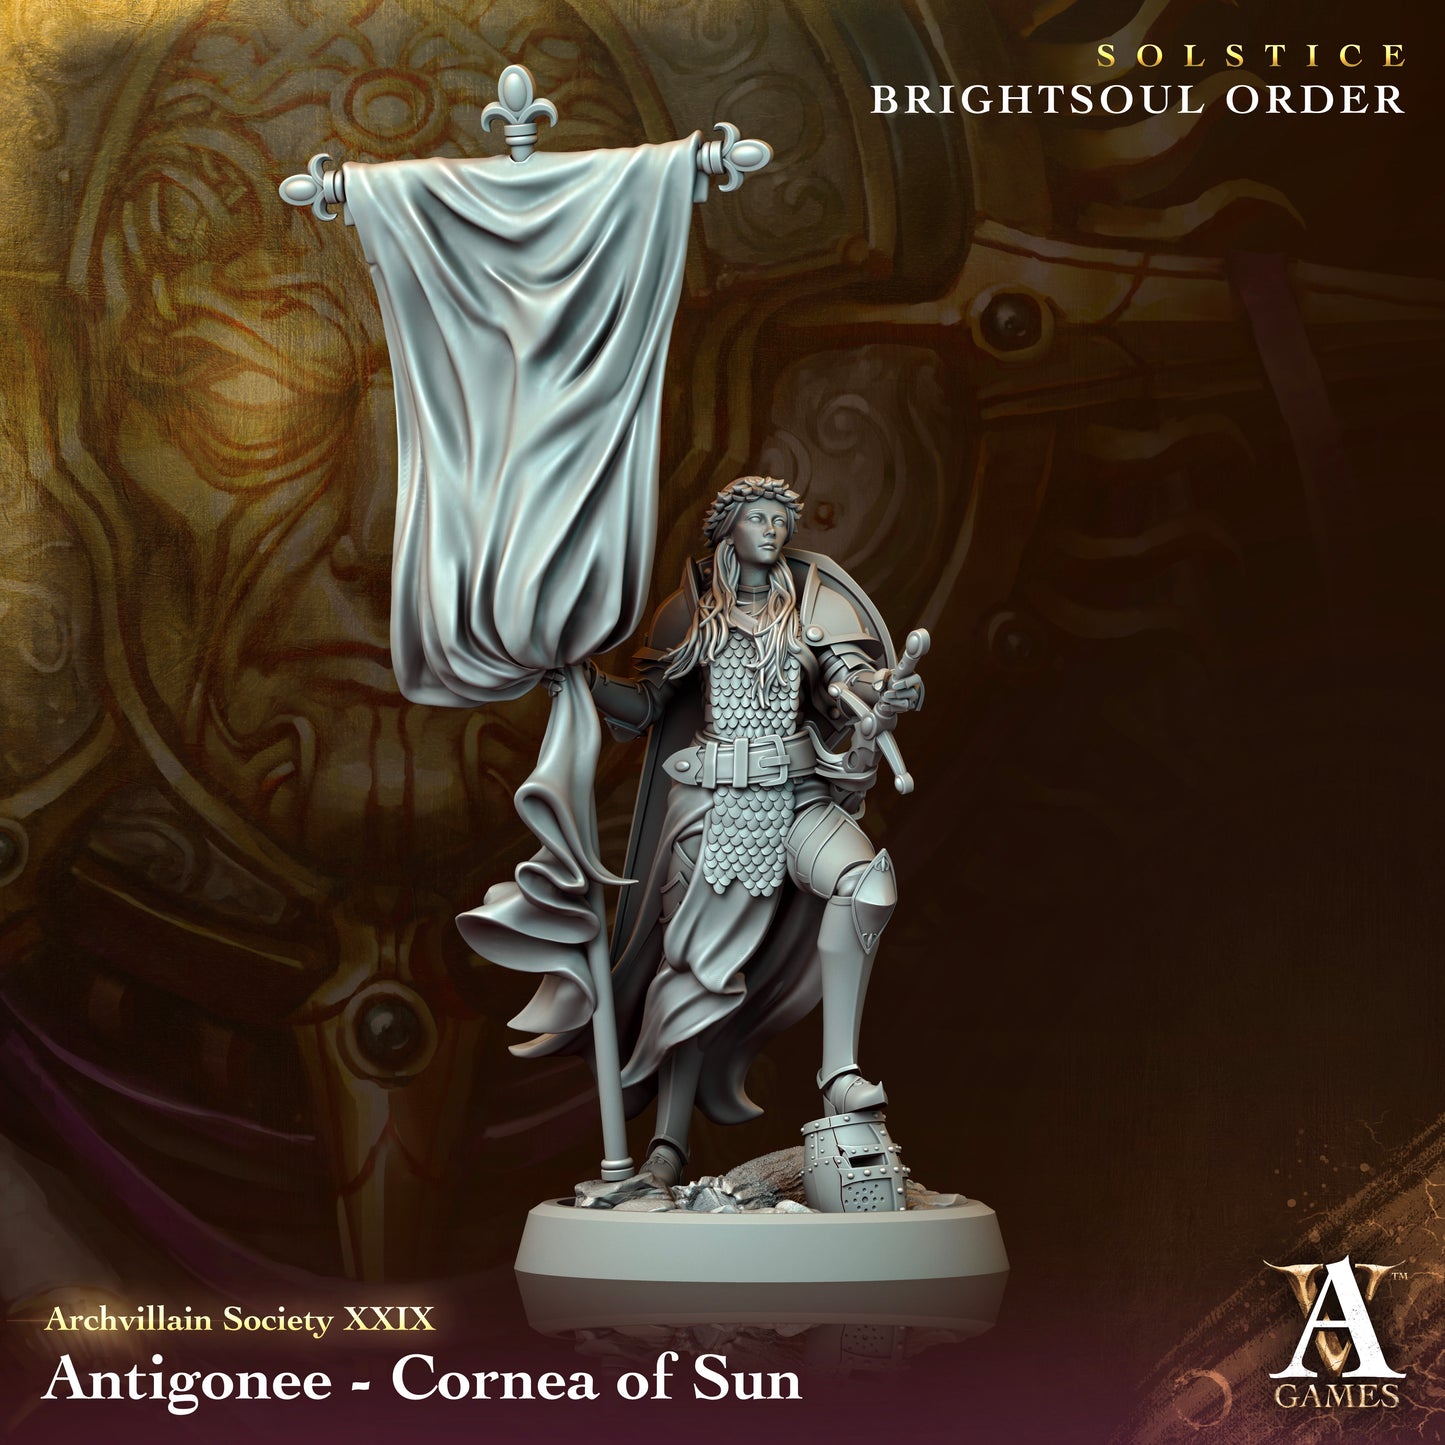 Antigonee - Cornea of Sun